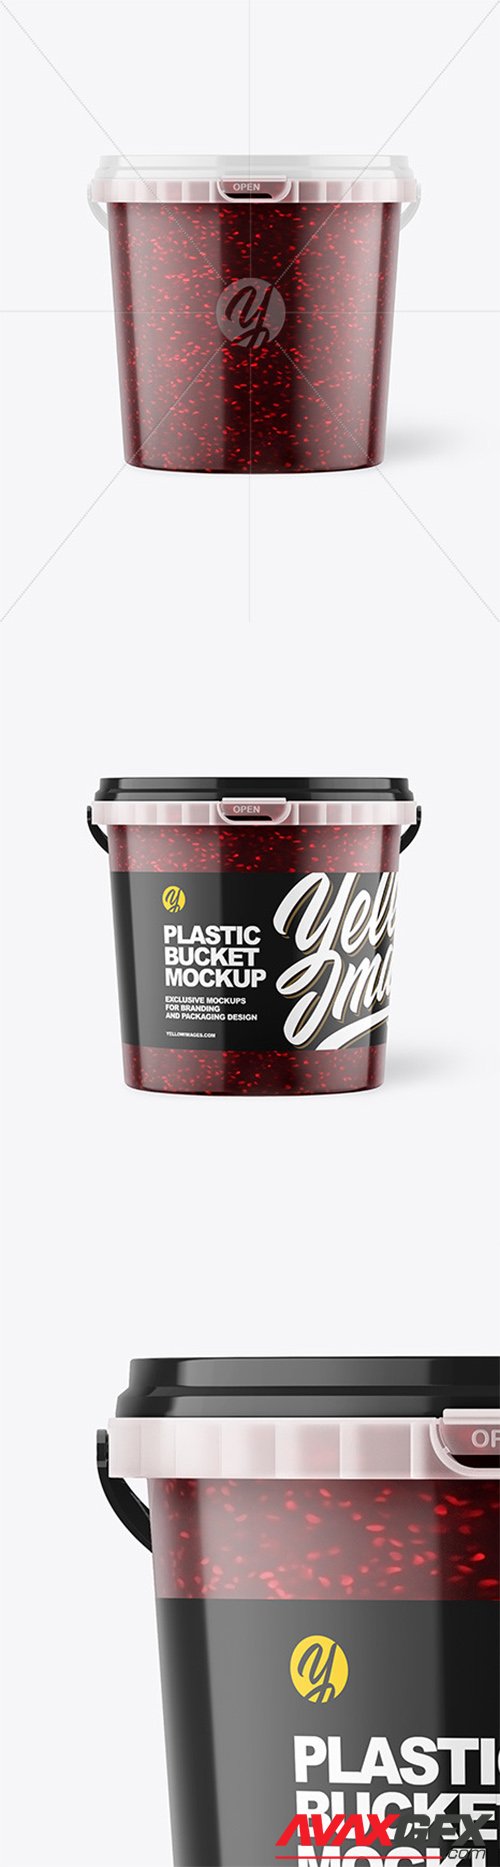 Plastic Bucket with Raspberry Jam Mockup 66489